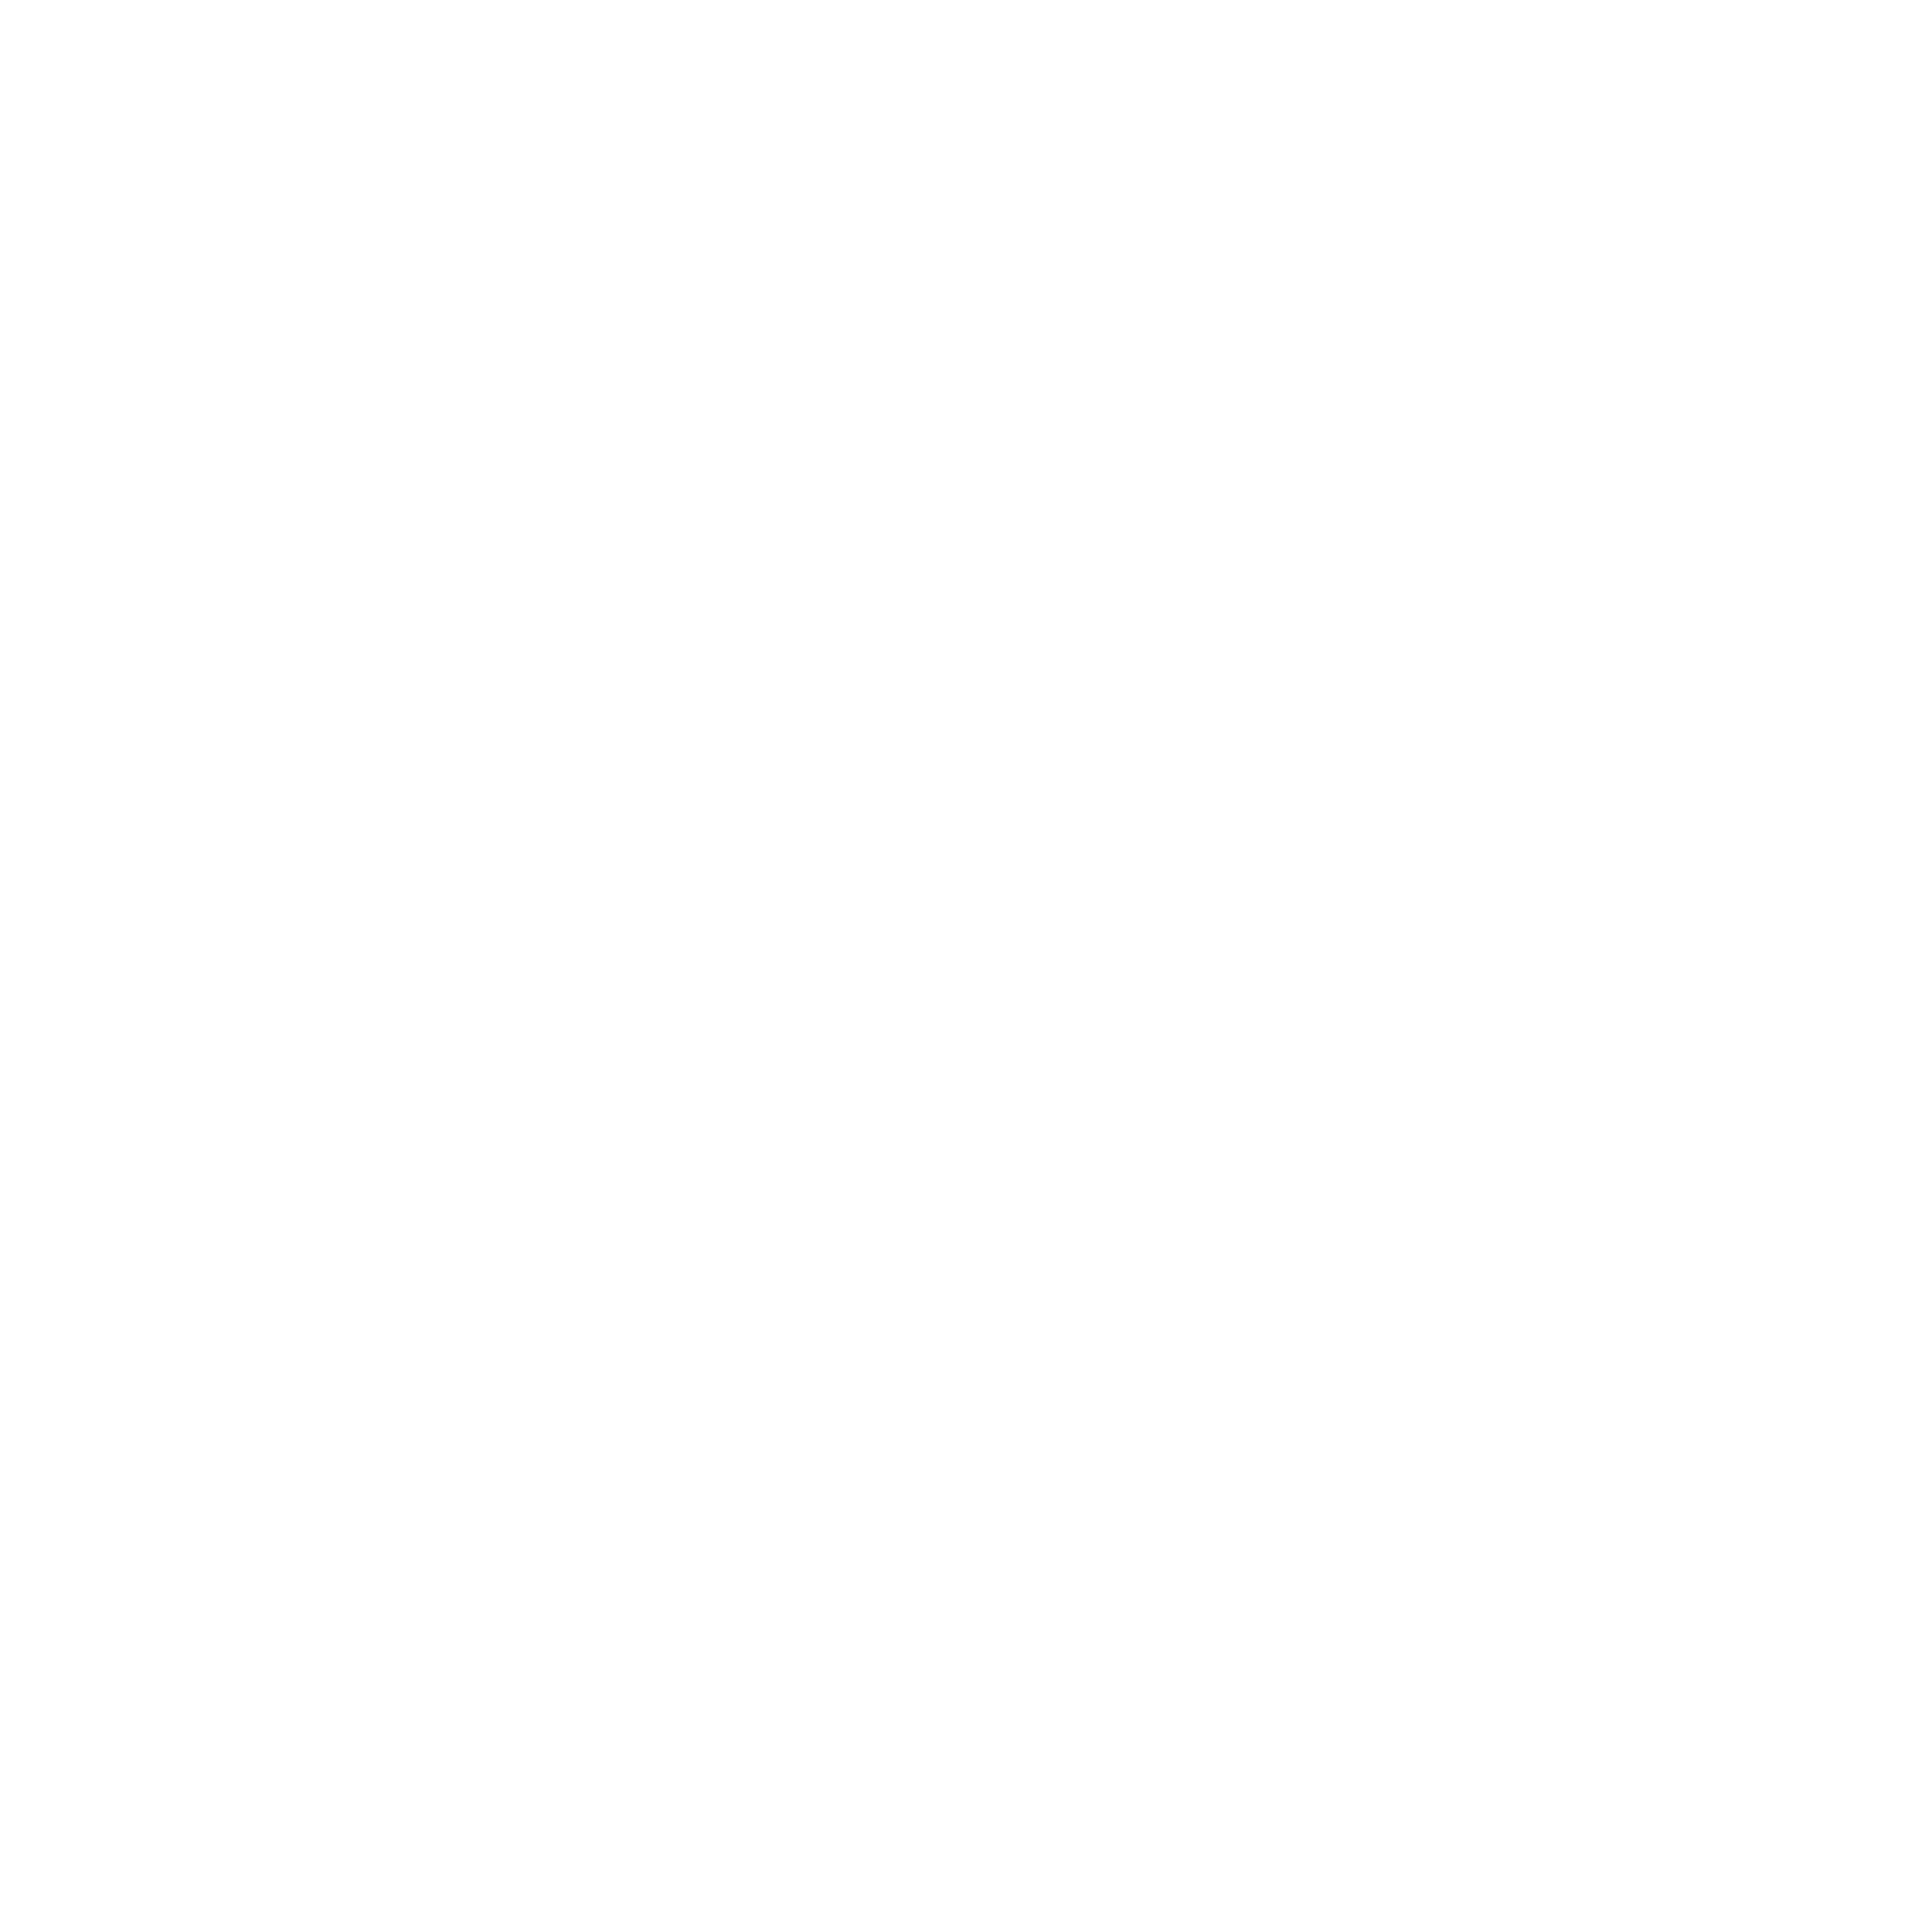 Scripps Landing Apartment Homes Logo